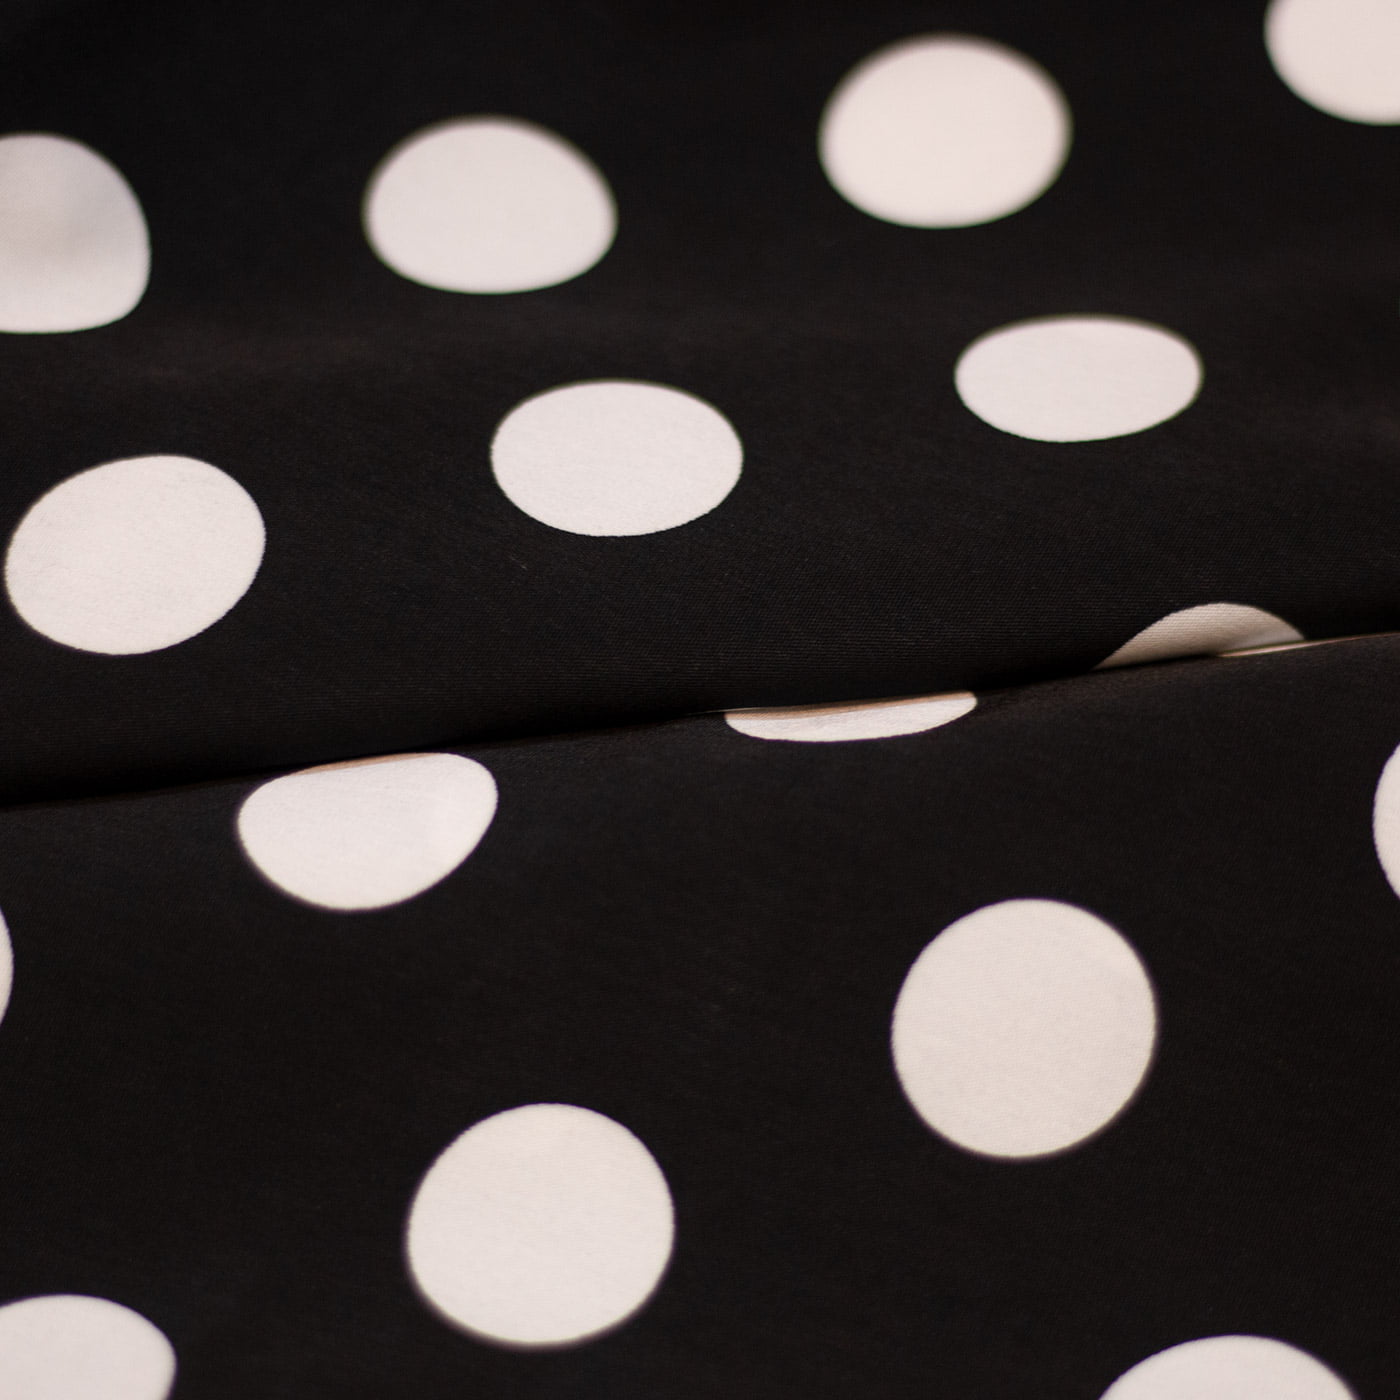 White Polka Dot Black Cotton Fabric